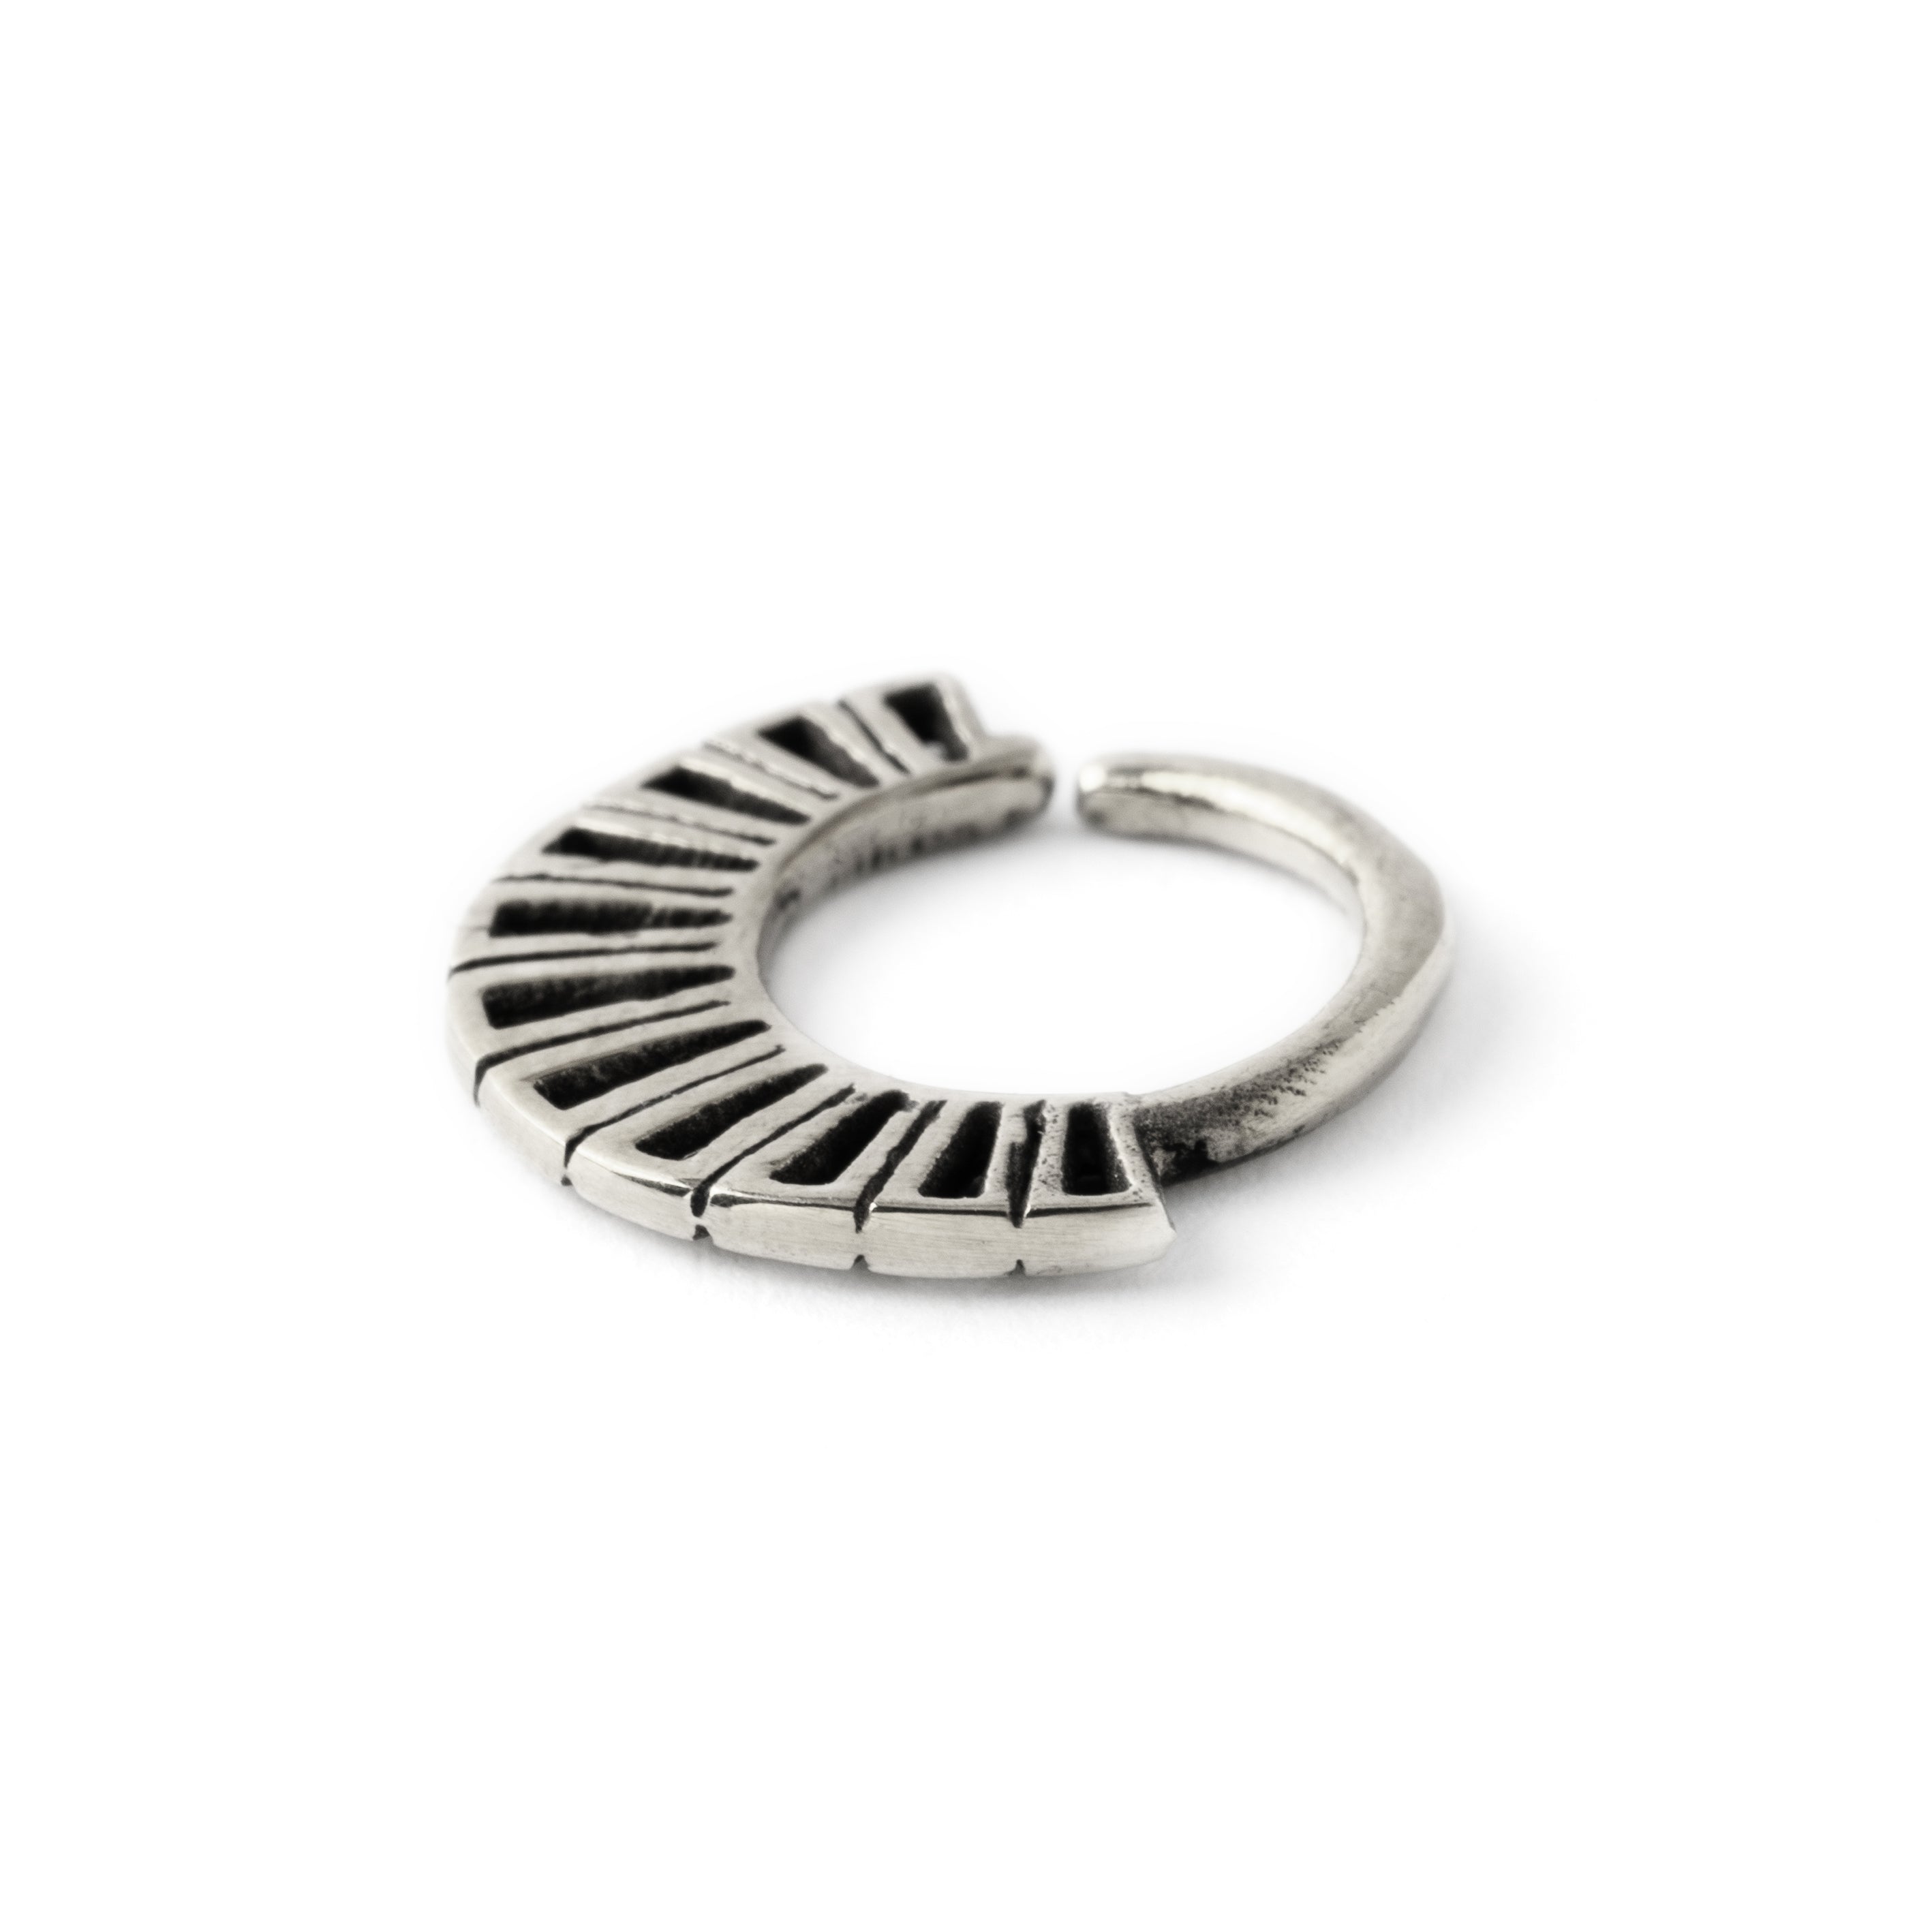 Aditi 18g (1mm) Silver tribal geometric septum piercing ring side view